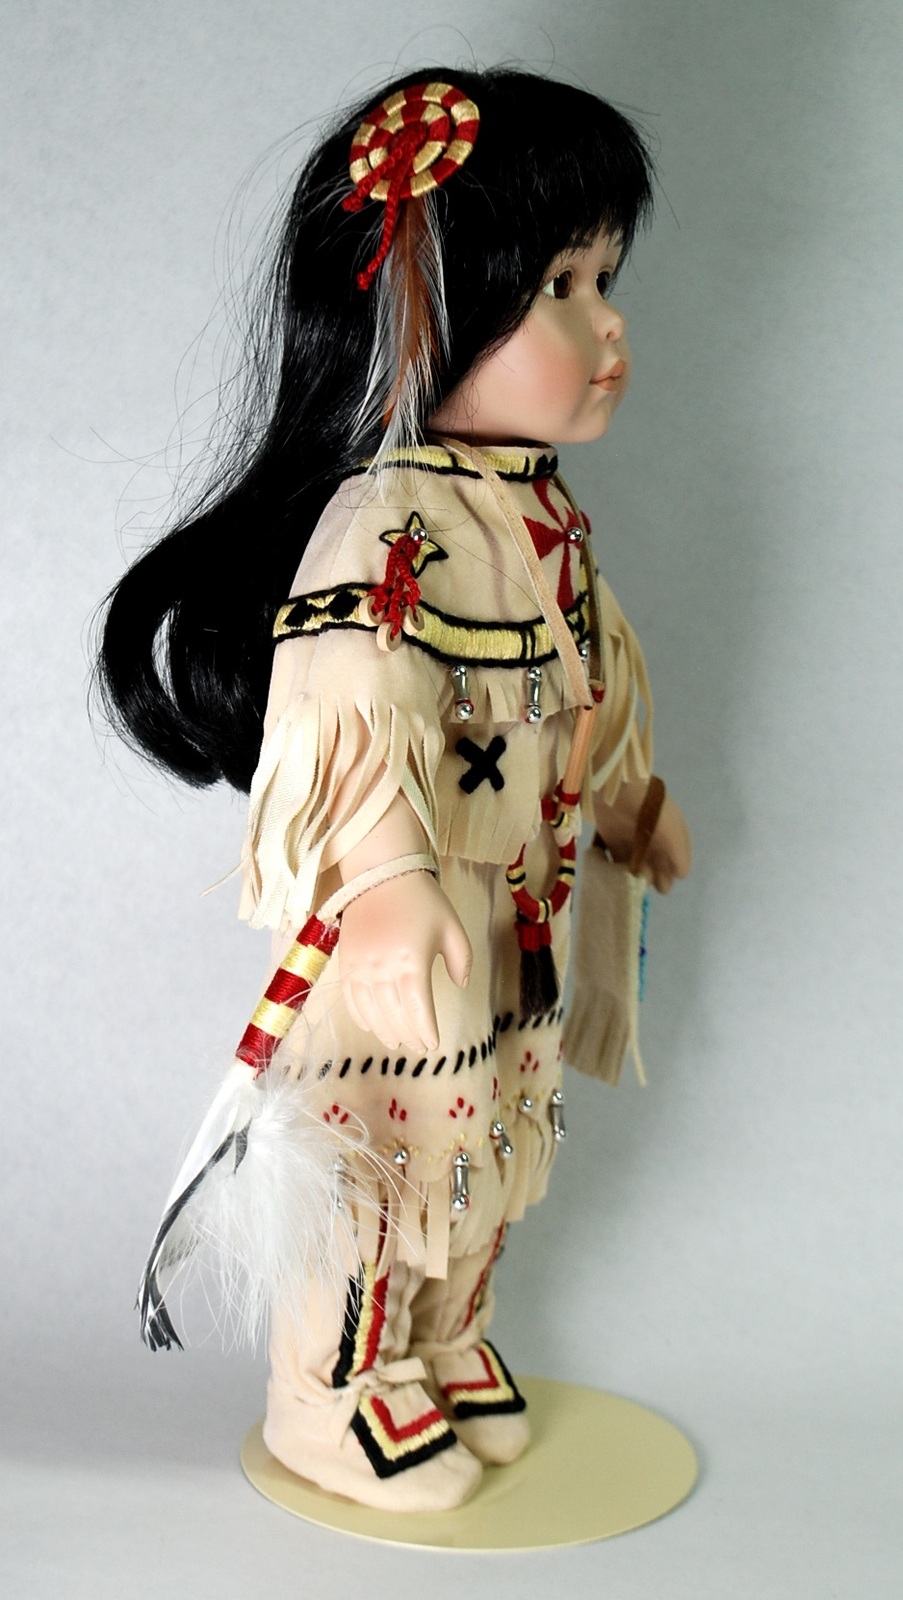 kinnex native american dolls